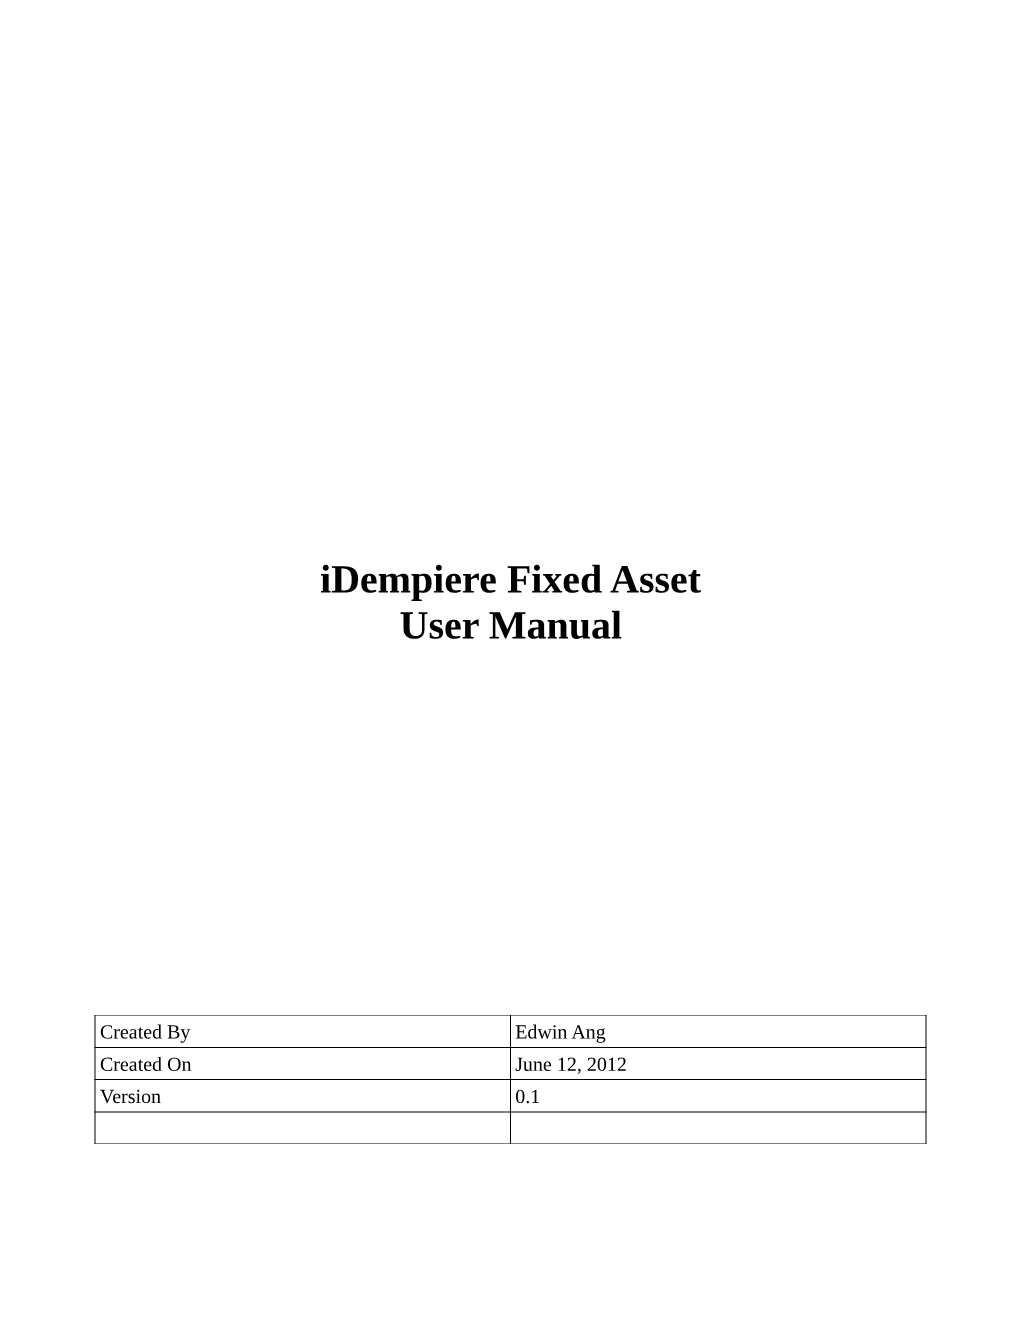 Idempiere Fixed Asset User Manual